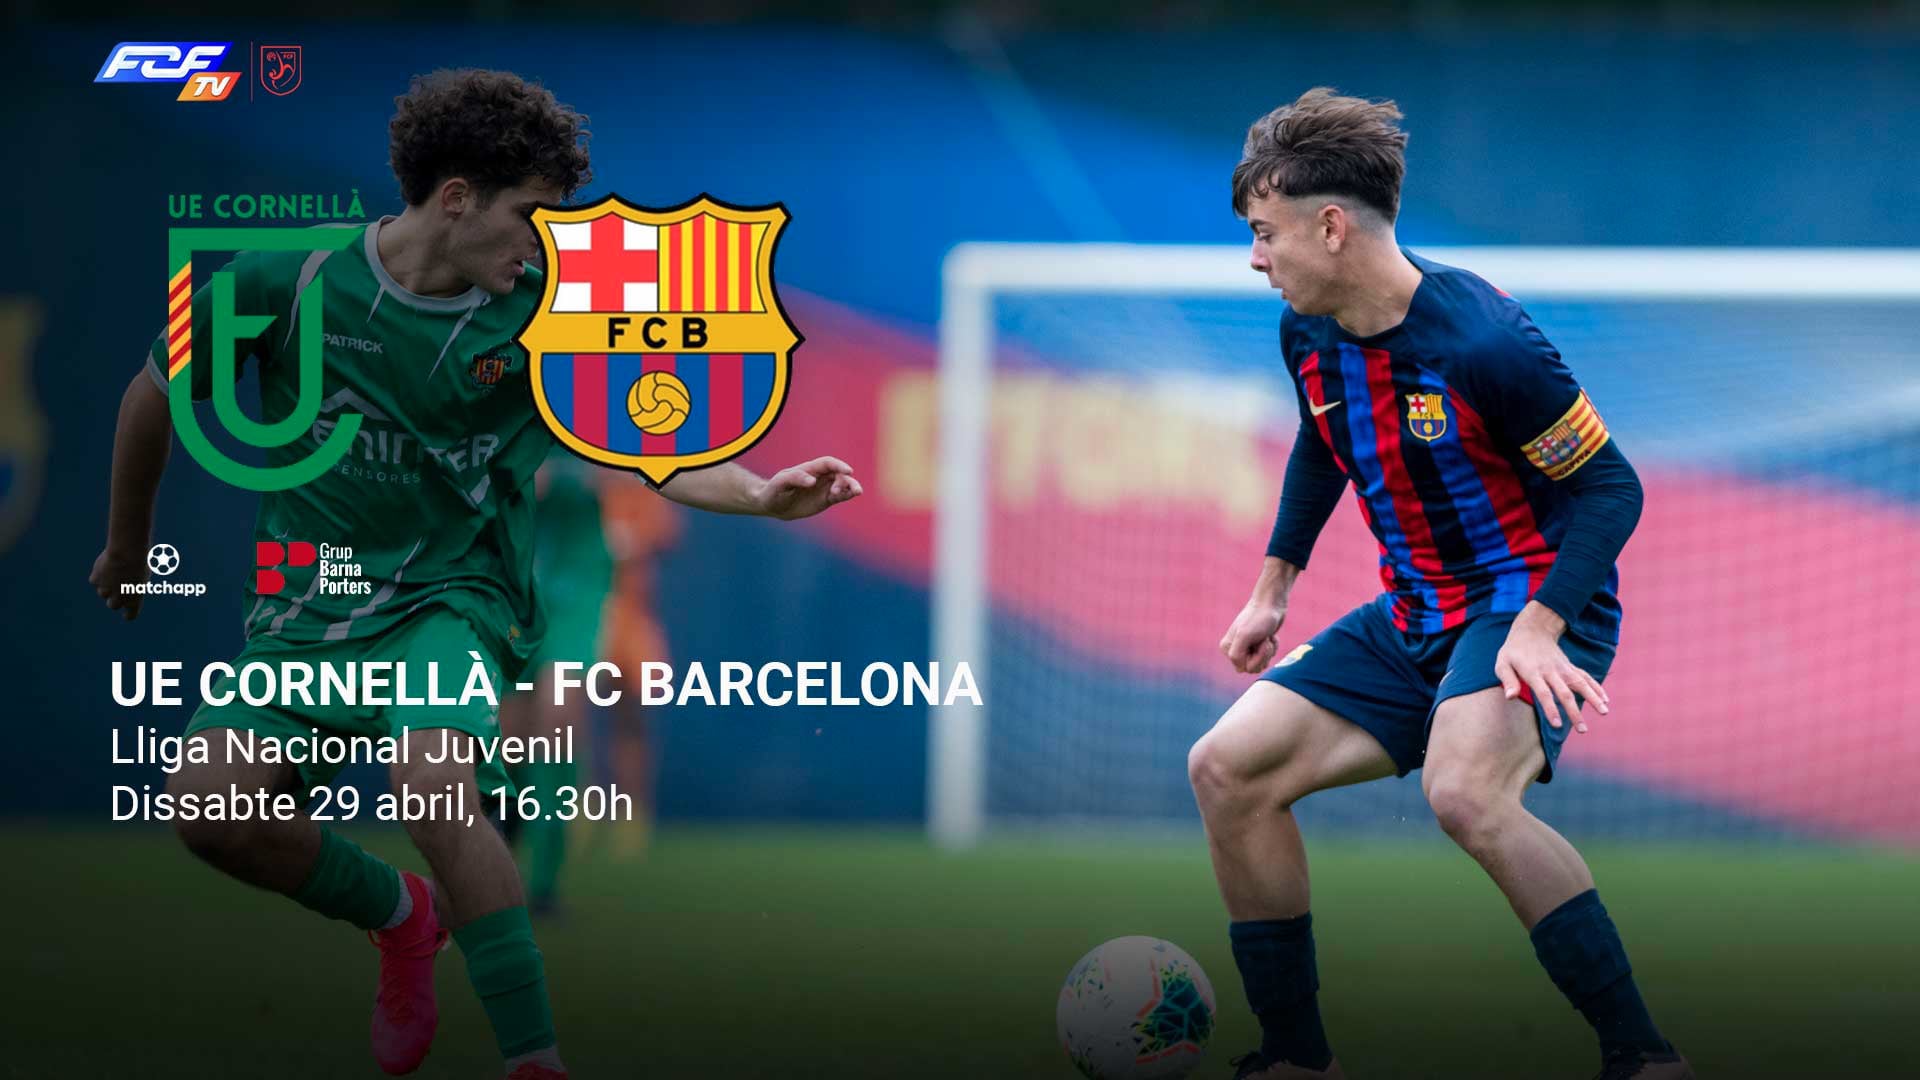 UE CORNELLÀ - FC BARCELONA on Vimeo